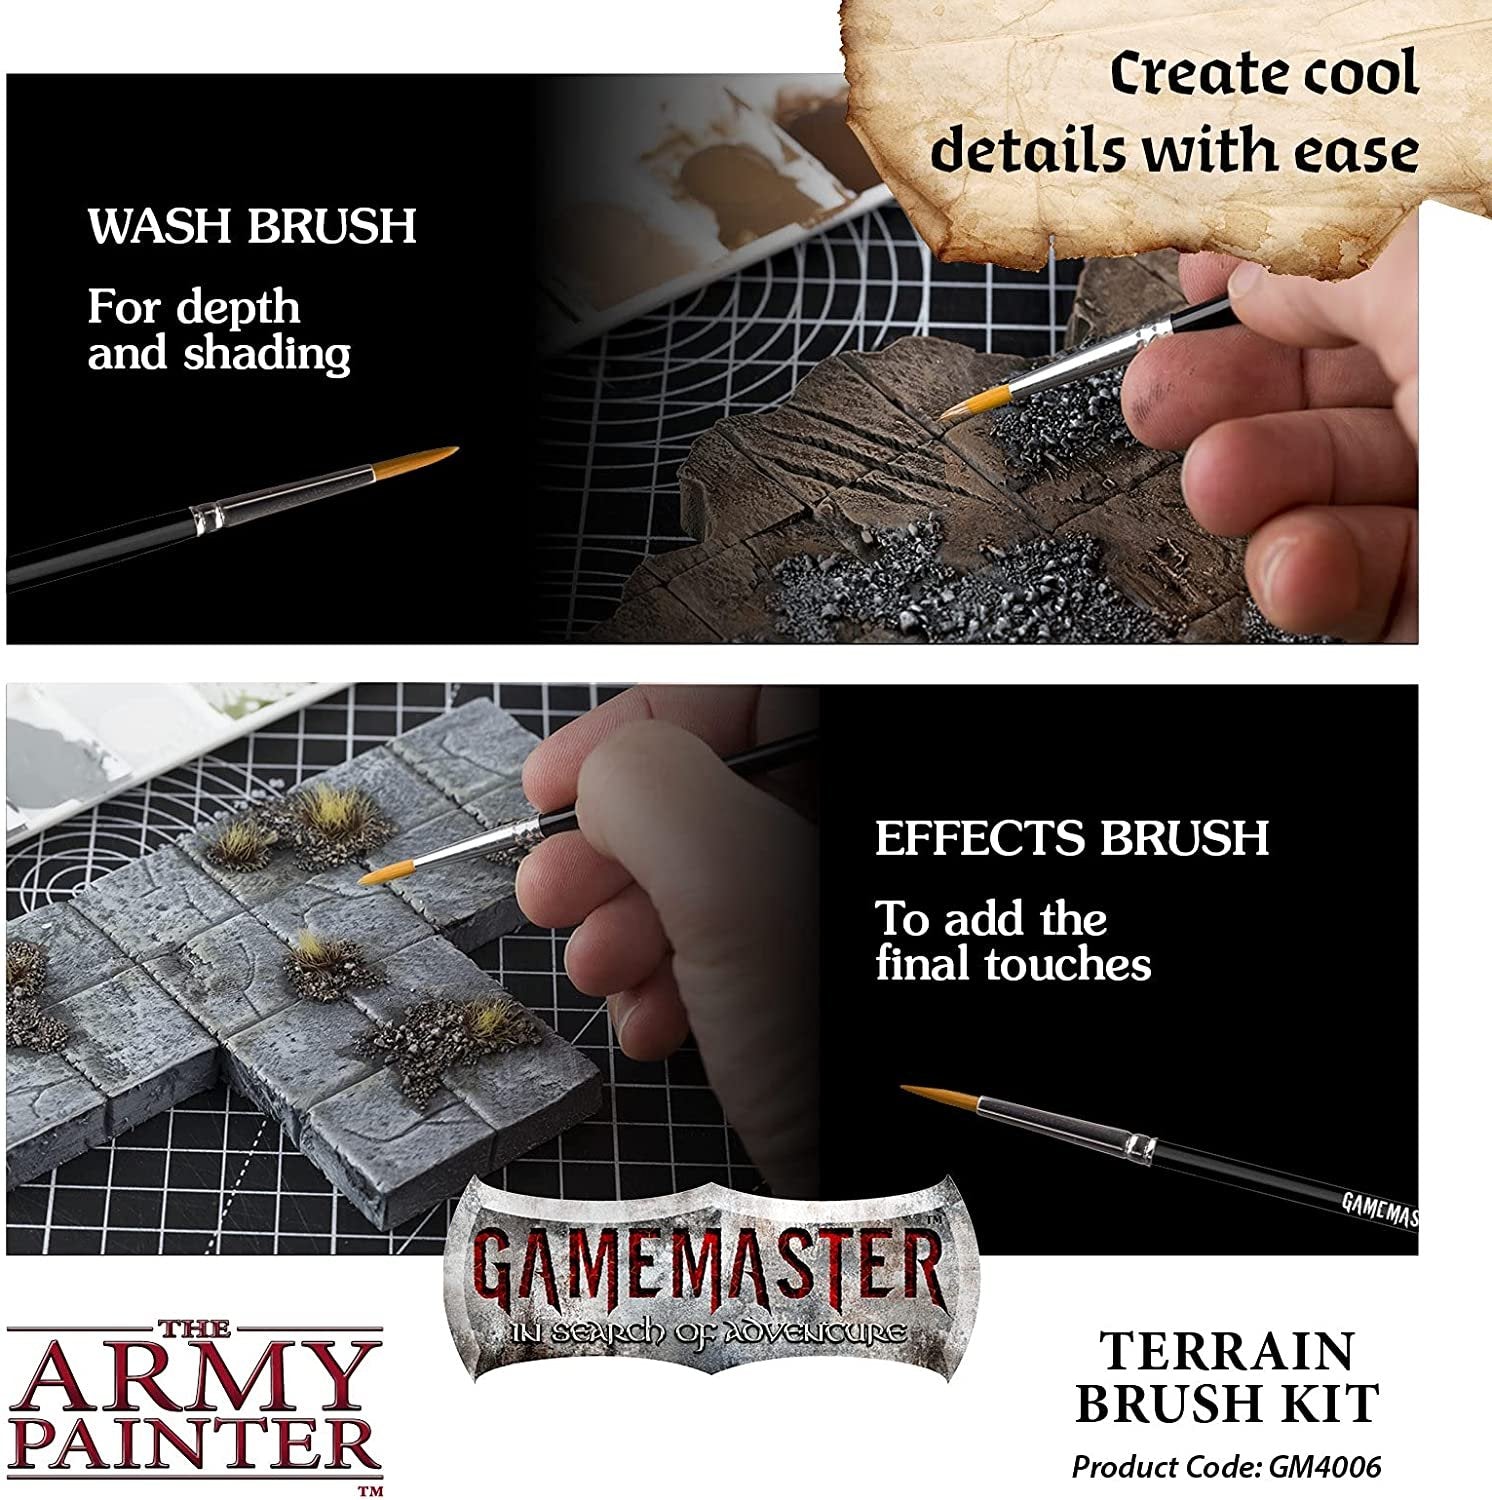 The Army Painter - GameMaster: Terrain Brush Kit